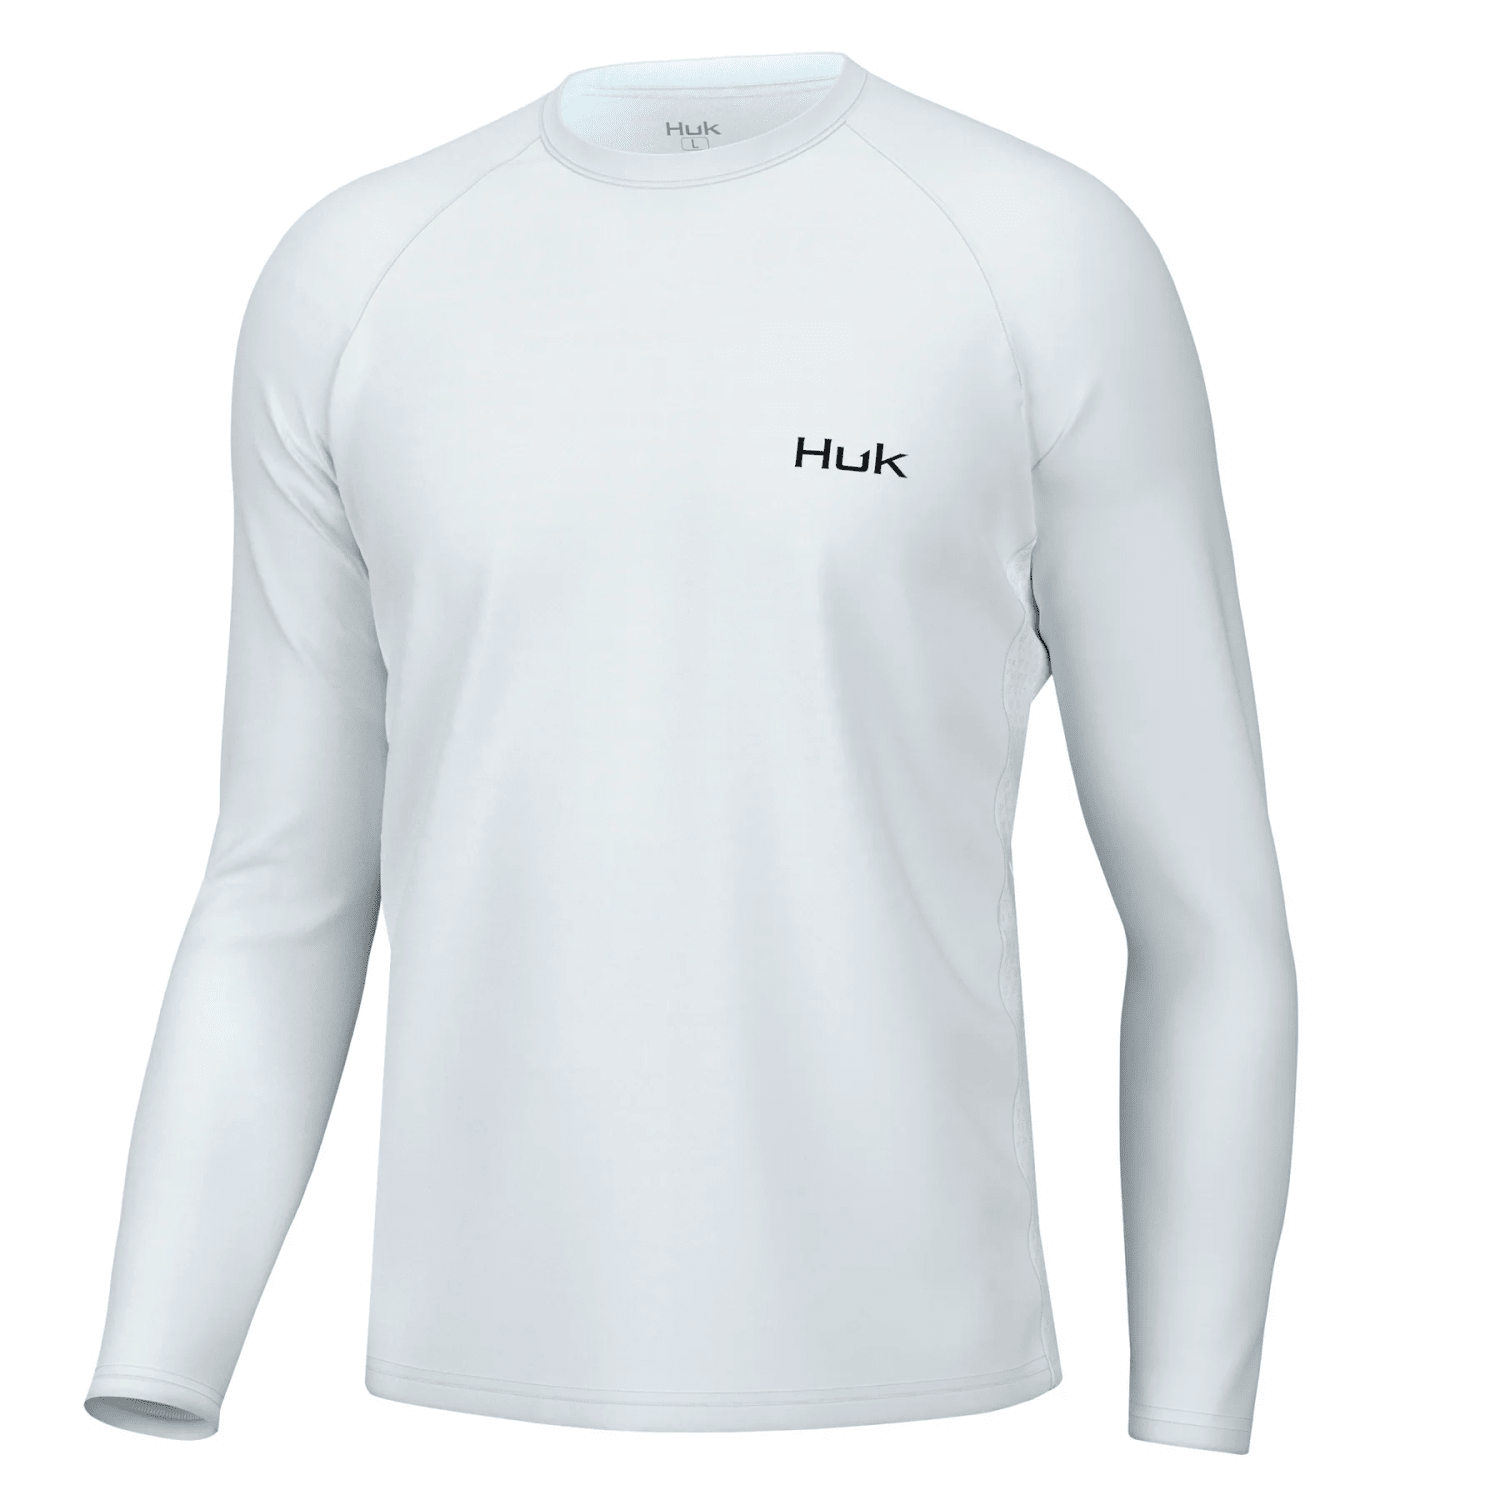 Huk Pursuit Crew Men's Tech Shirt